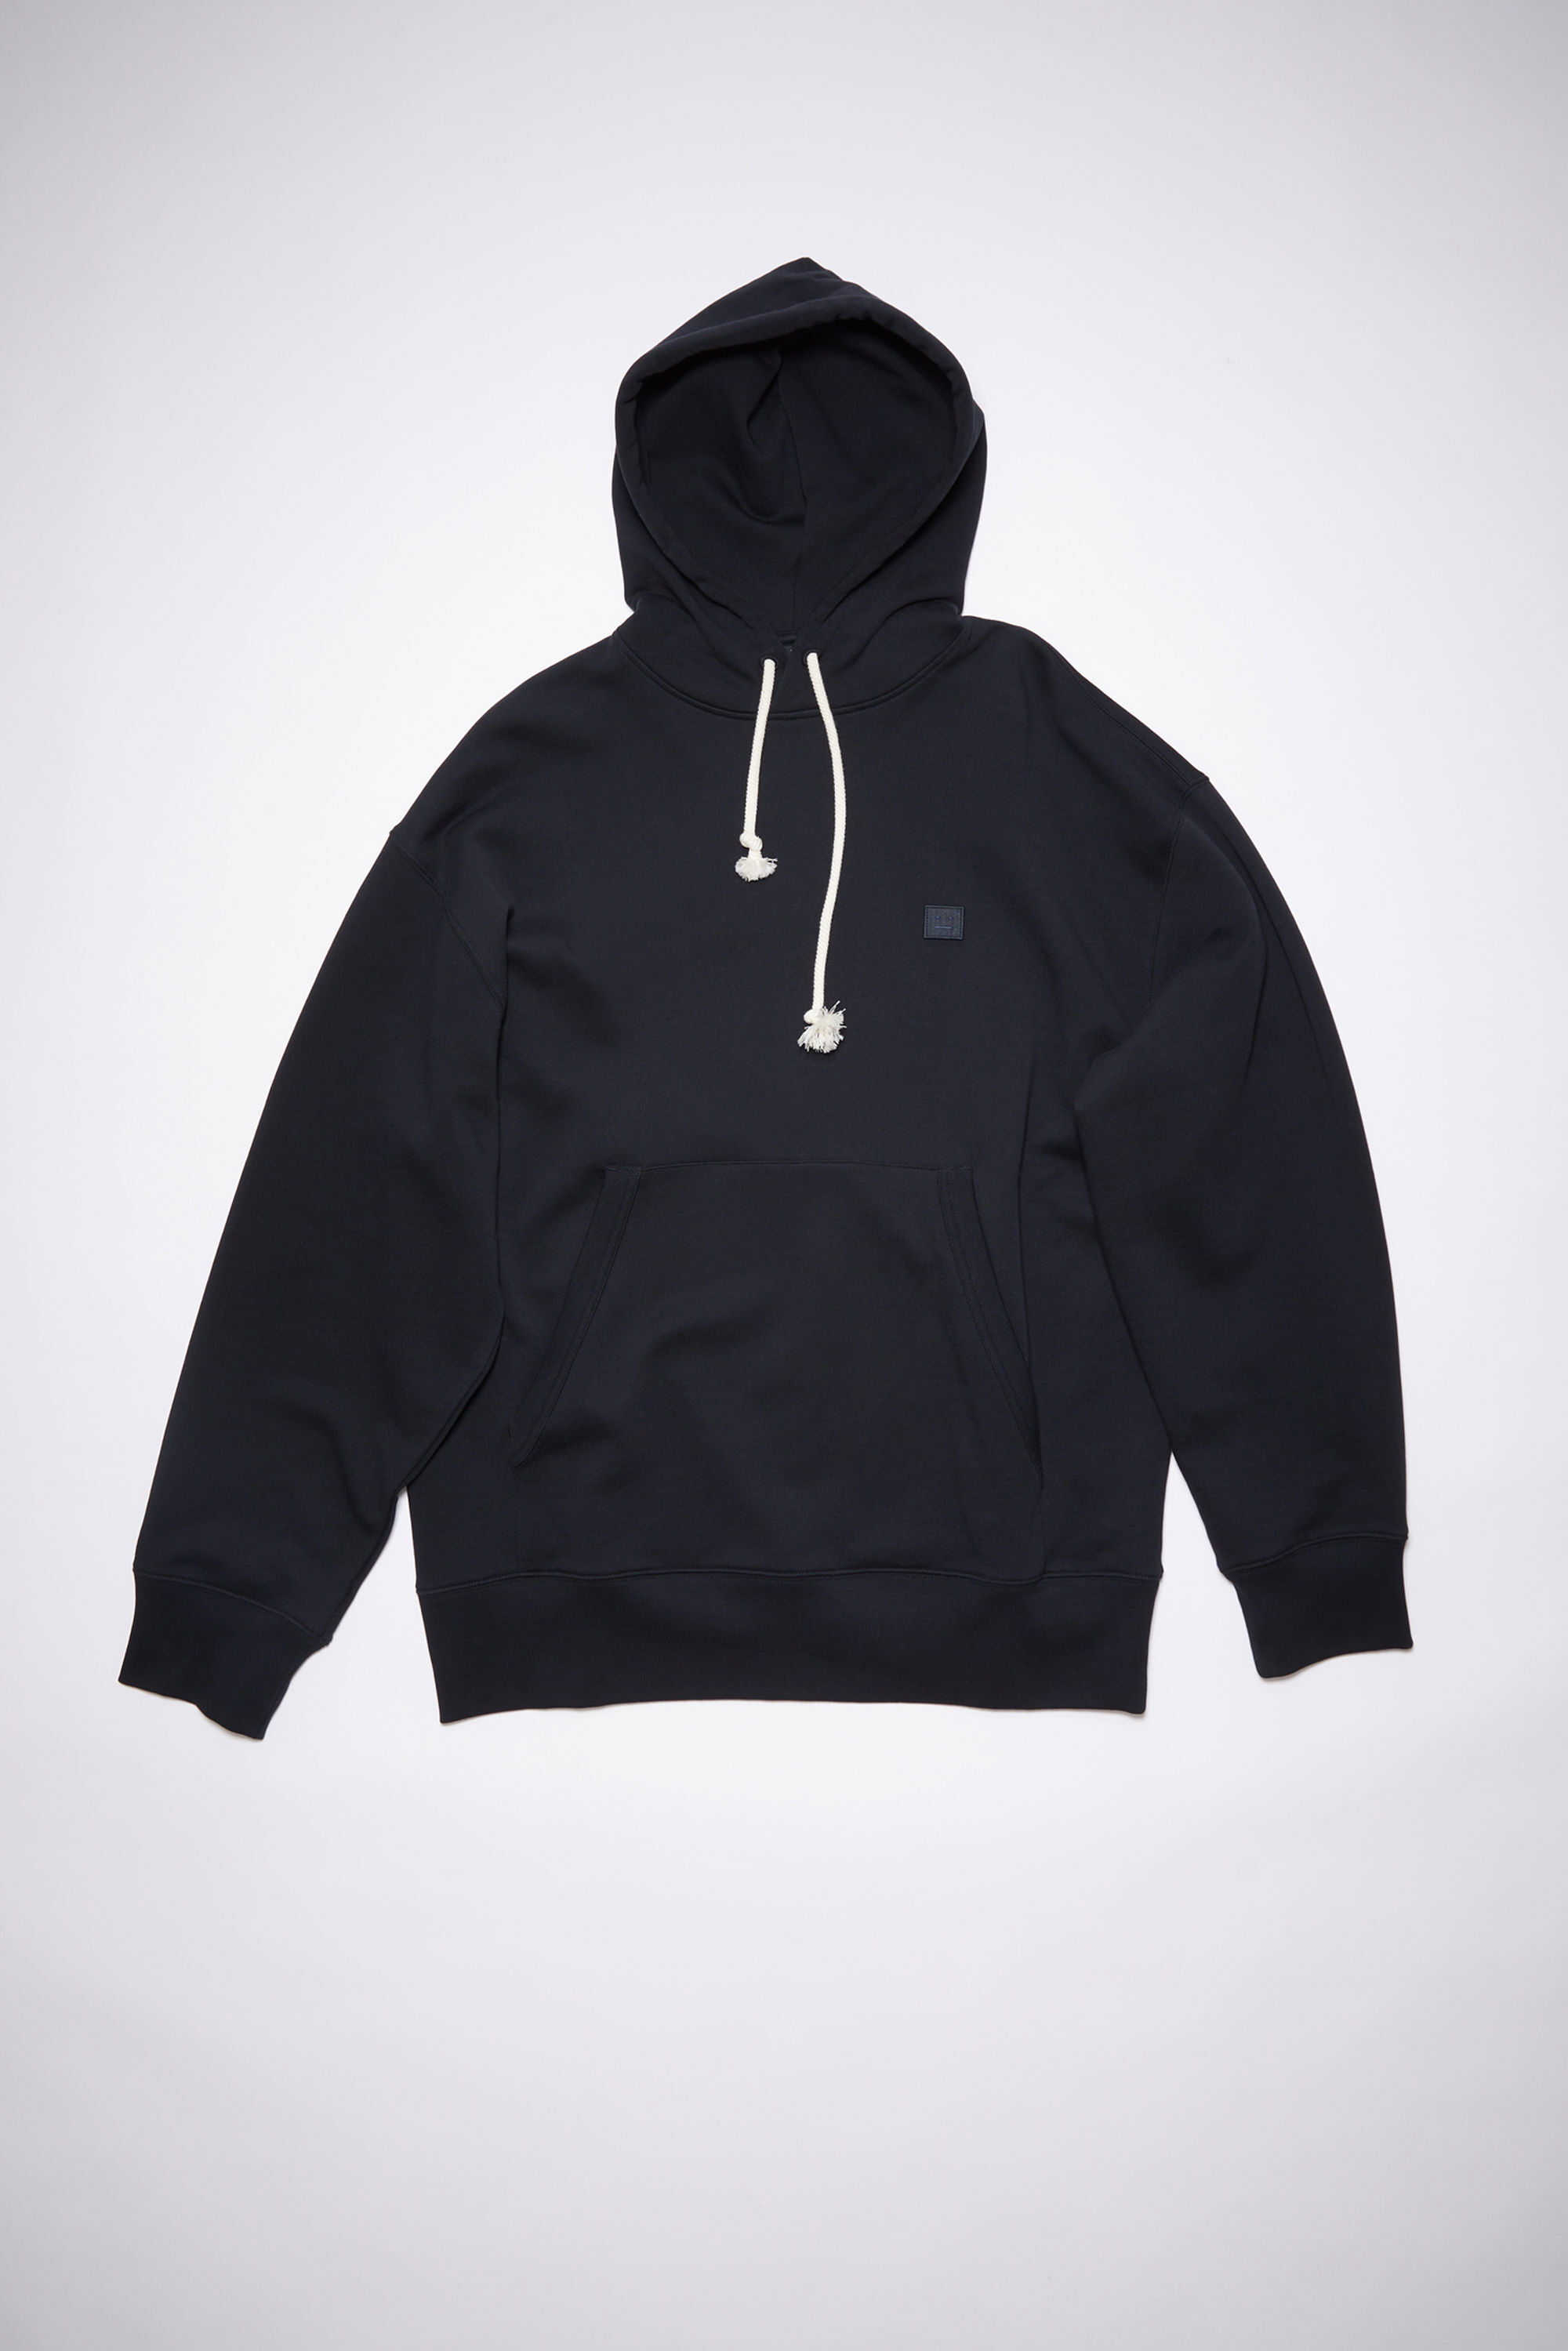 Acne Studios - Hooded sweatshirt - Oversized fit - Black